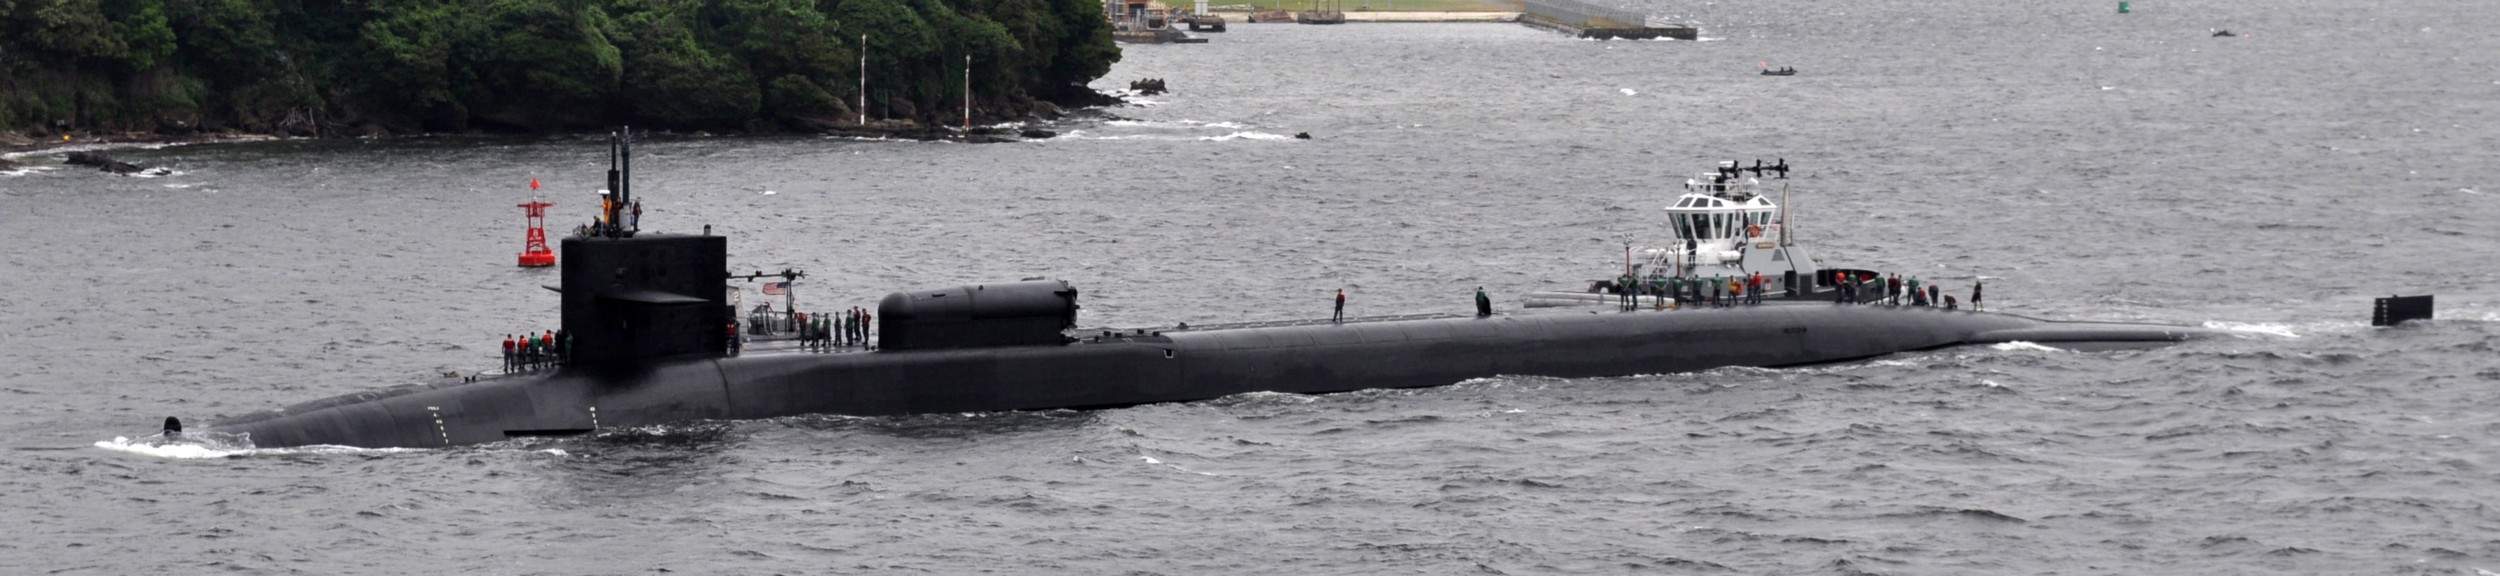 ssgn-727 uss michigan guided missile submarine 2012 17 yokosuka japan